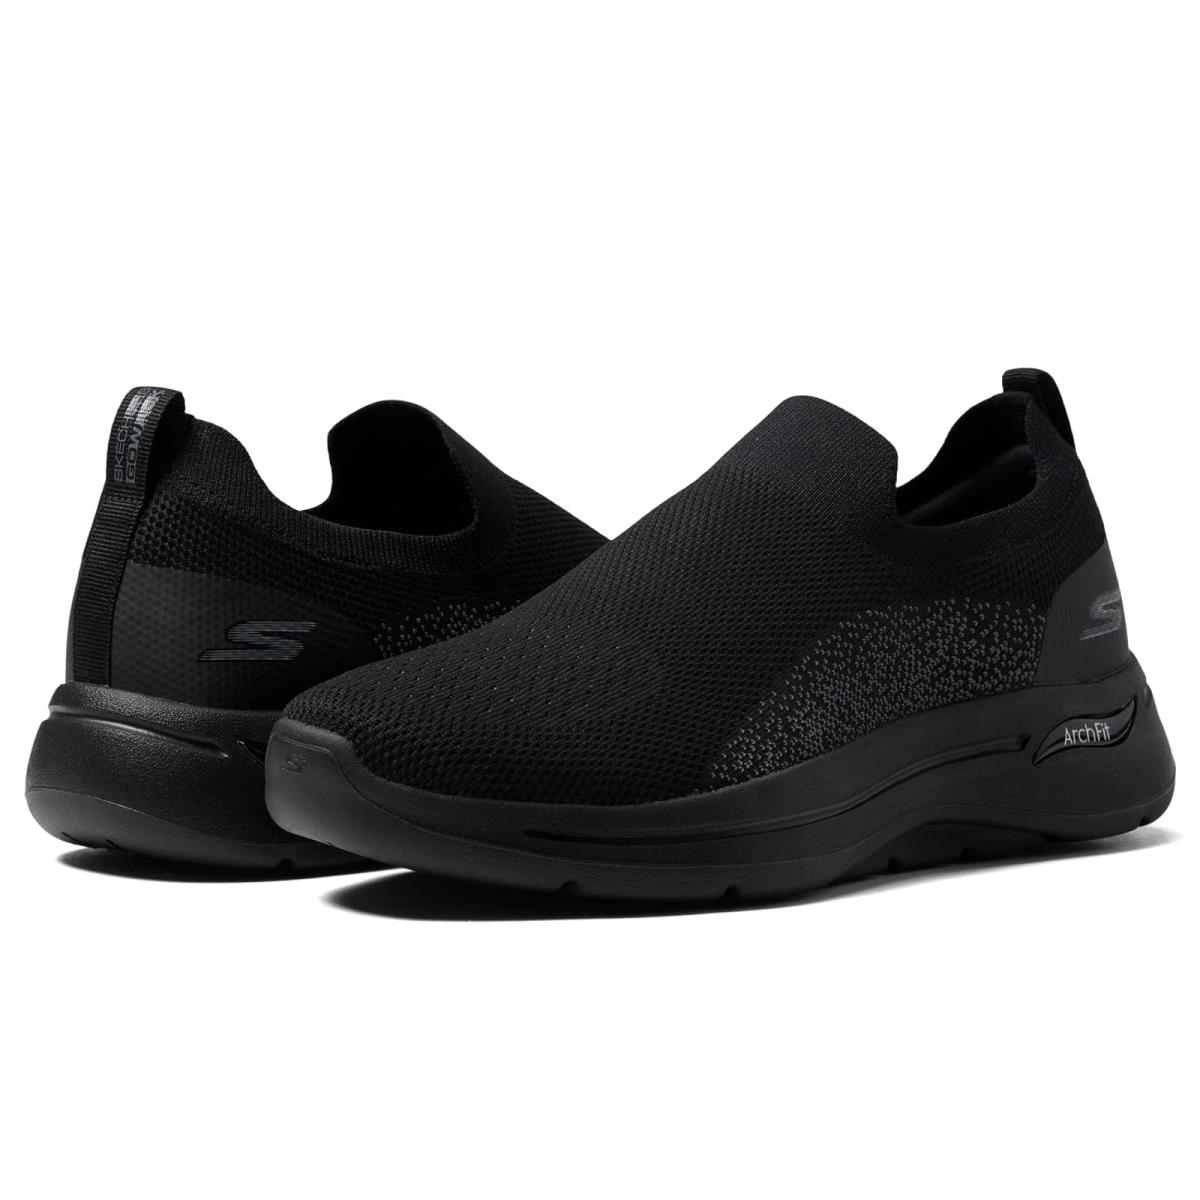 Man`s Shoes Skechers Performance Go Walk Arch Fit - 216136 Black